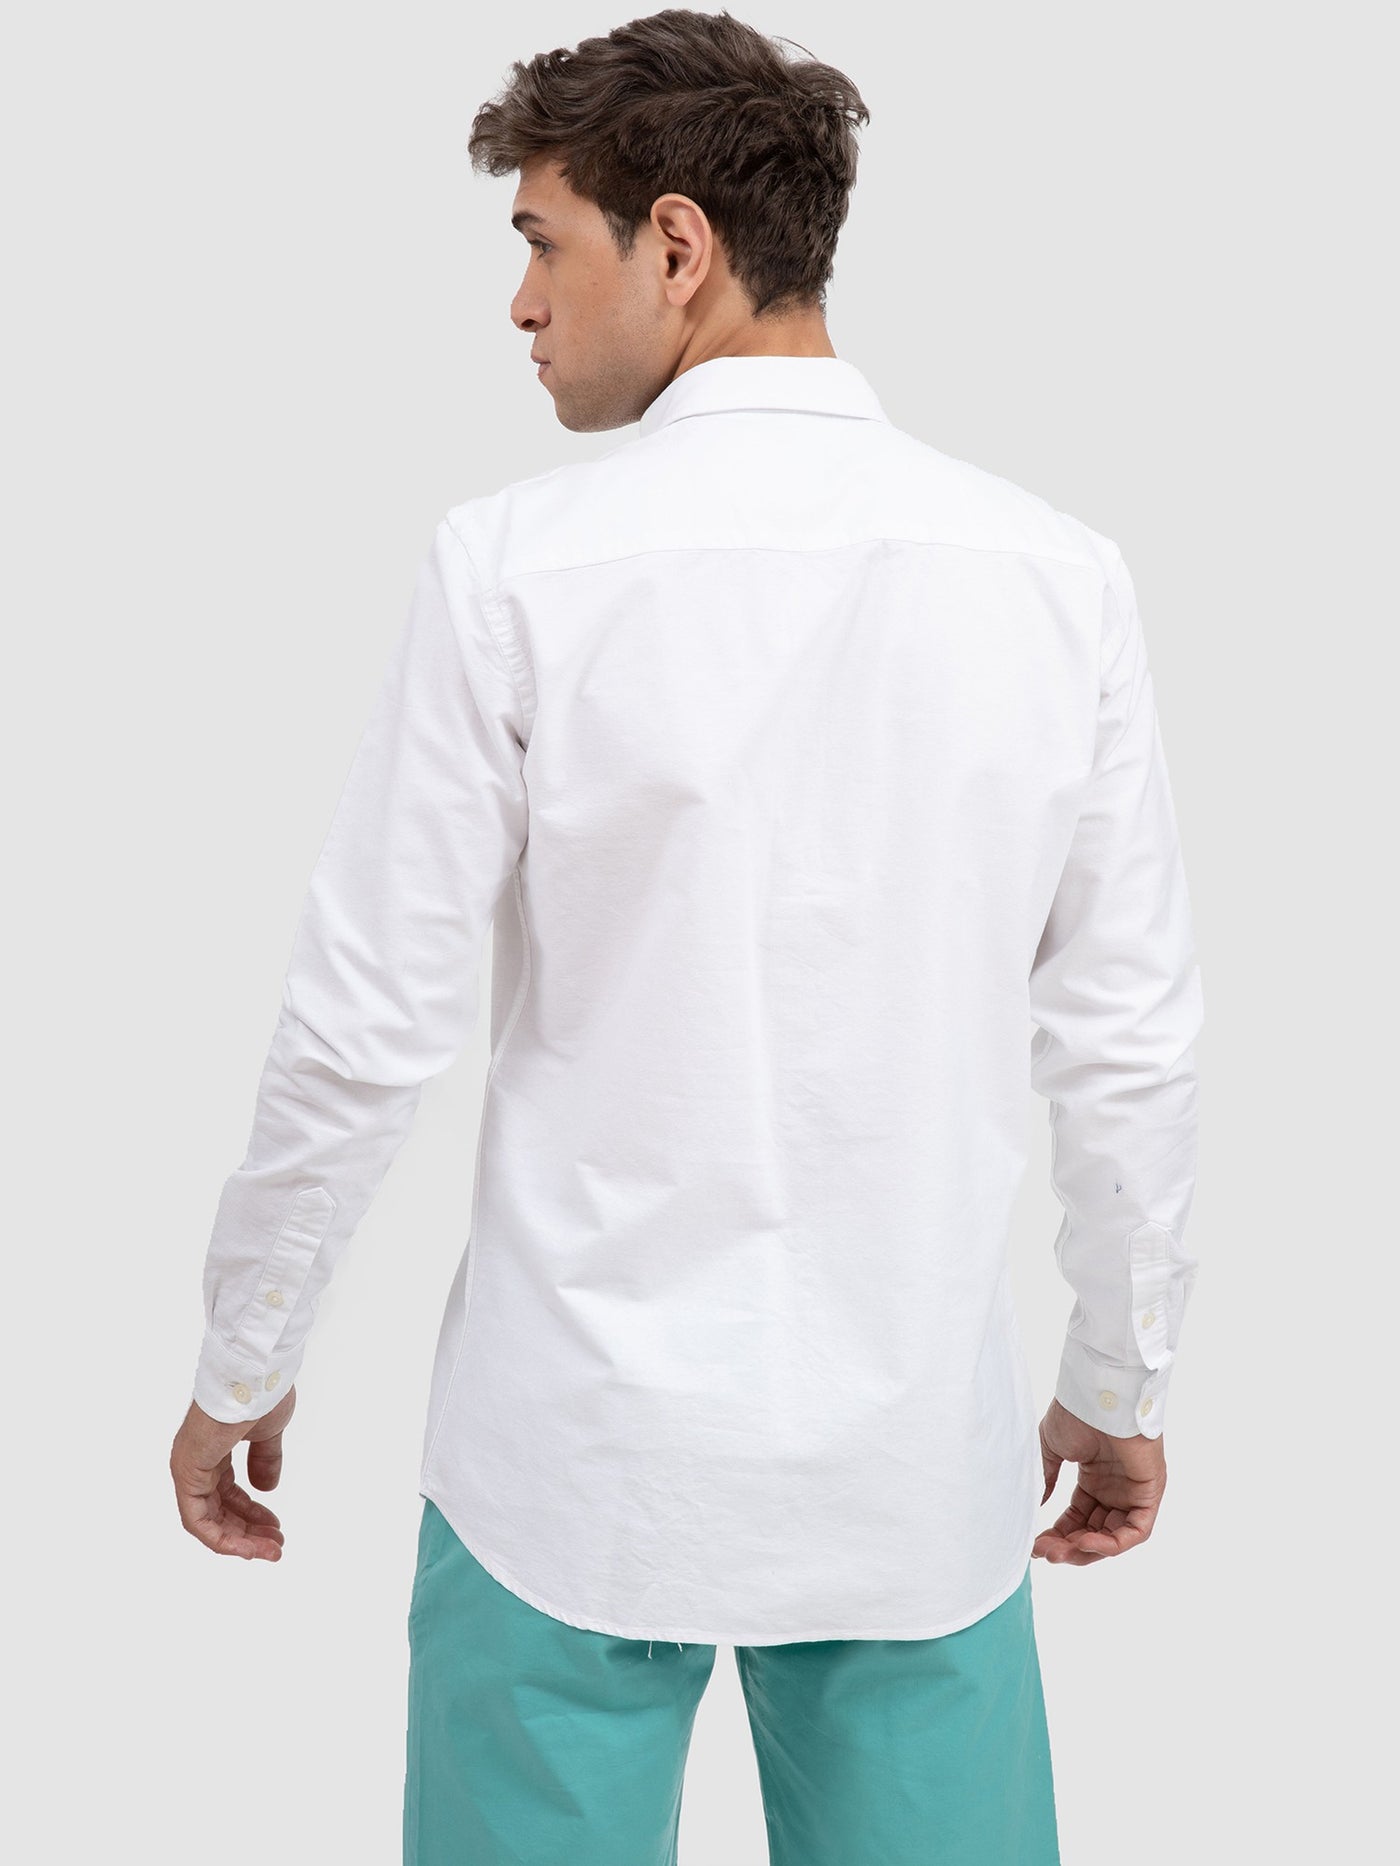 Premoda Mens Plain Long Sleeve Shirt